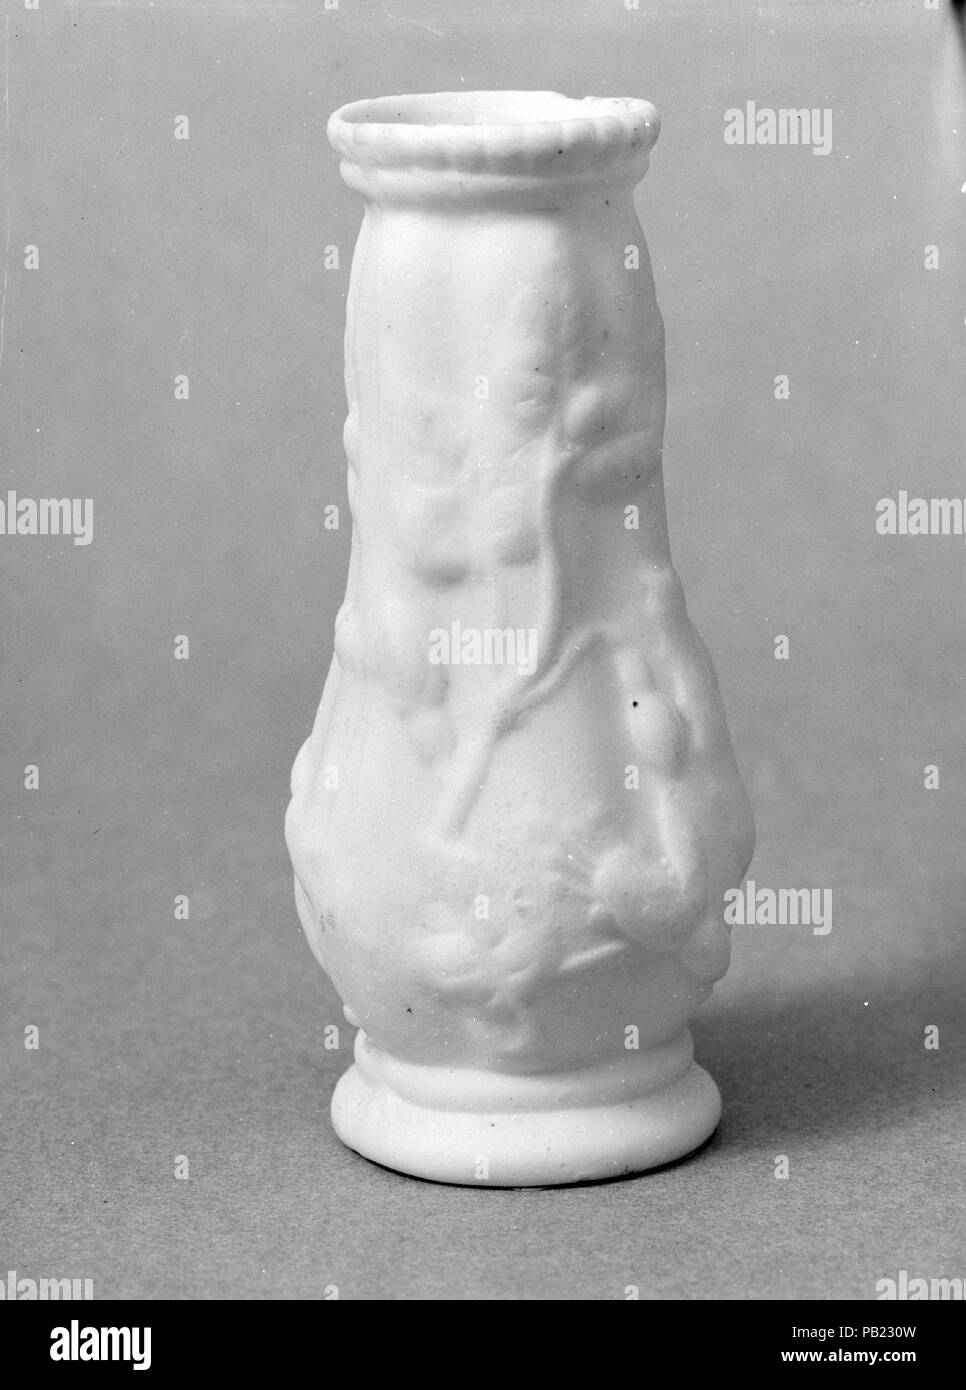 Vase. Culture: American. Dimensions: 3 1/2 x 1 5/8 in. (8.9 x 4.1 cm). Date: 1830-70. Museum: Metropolitan Museum of Art, New York, USA. Stock Photo